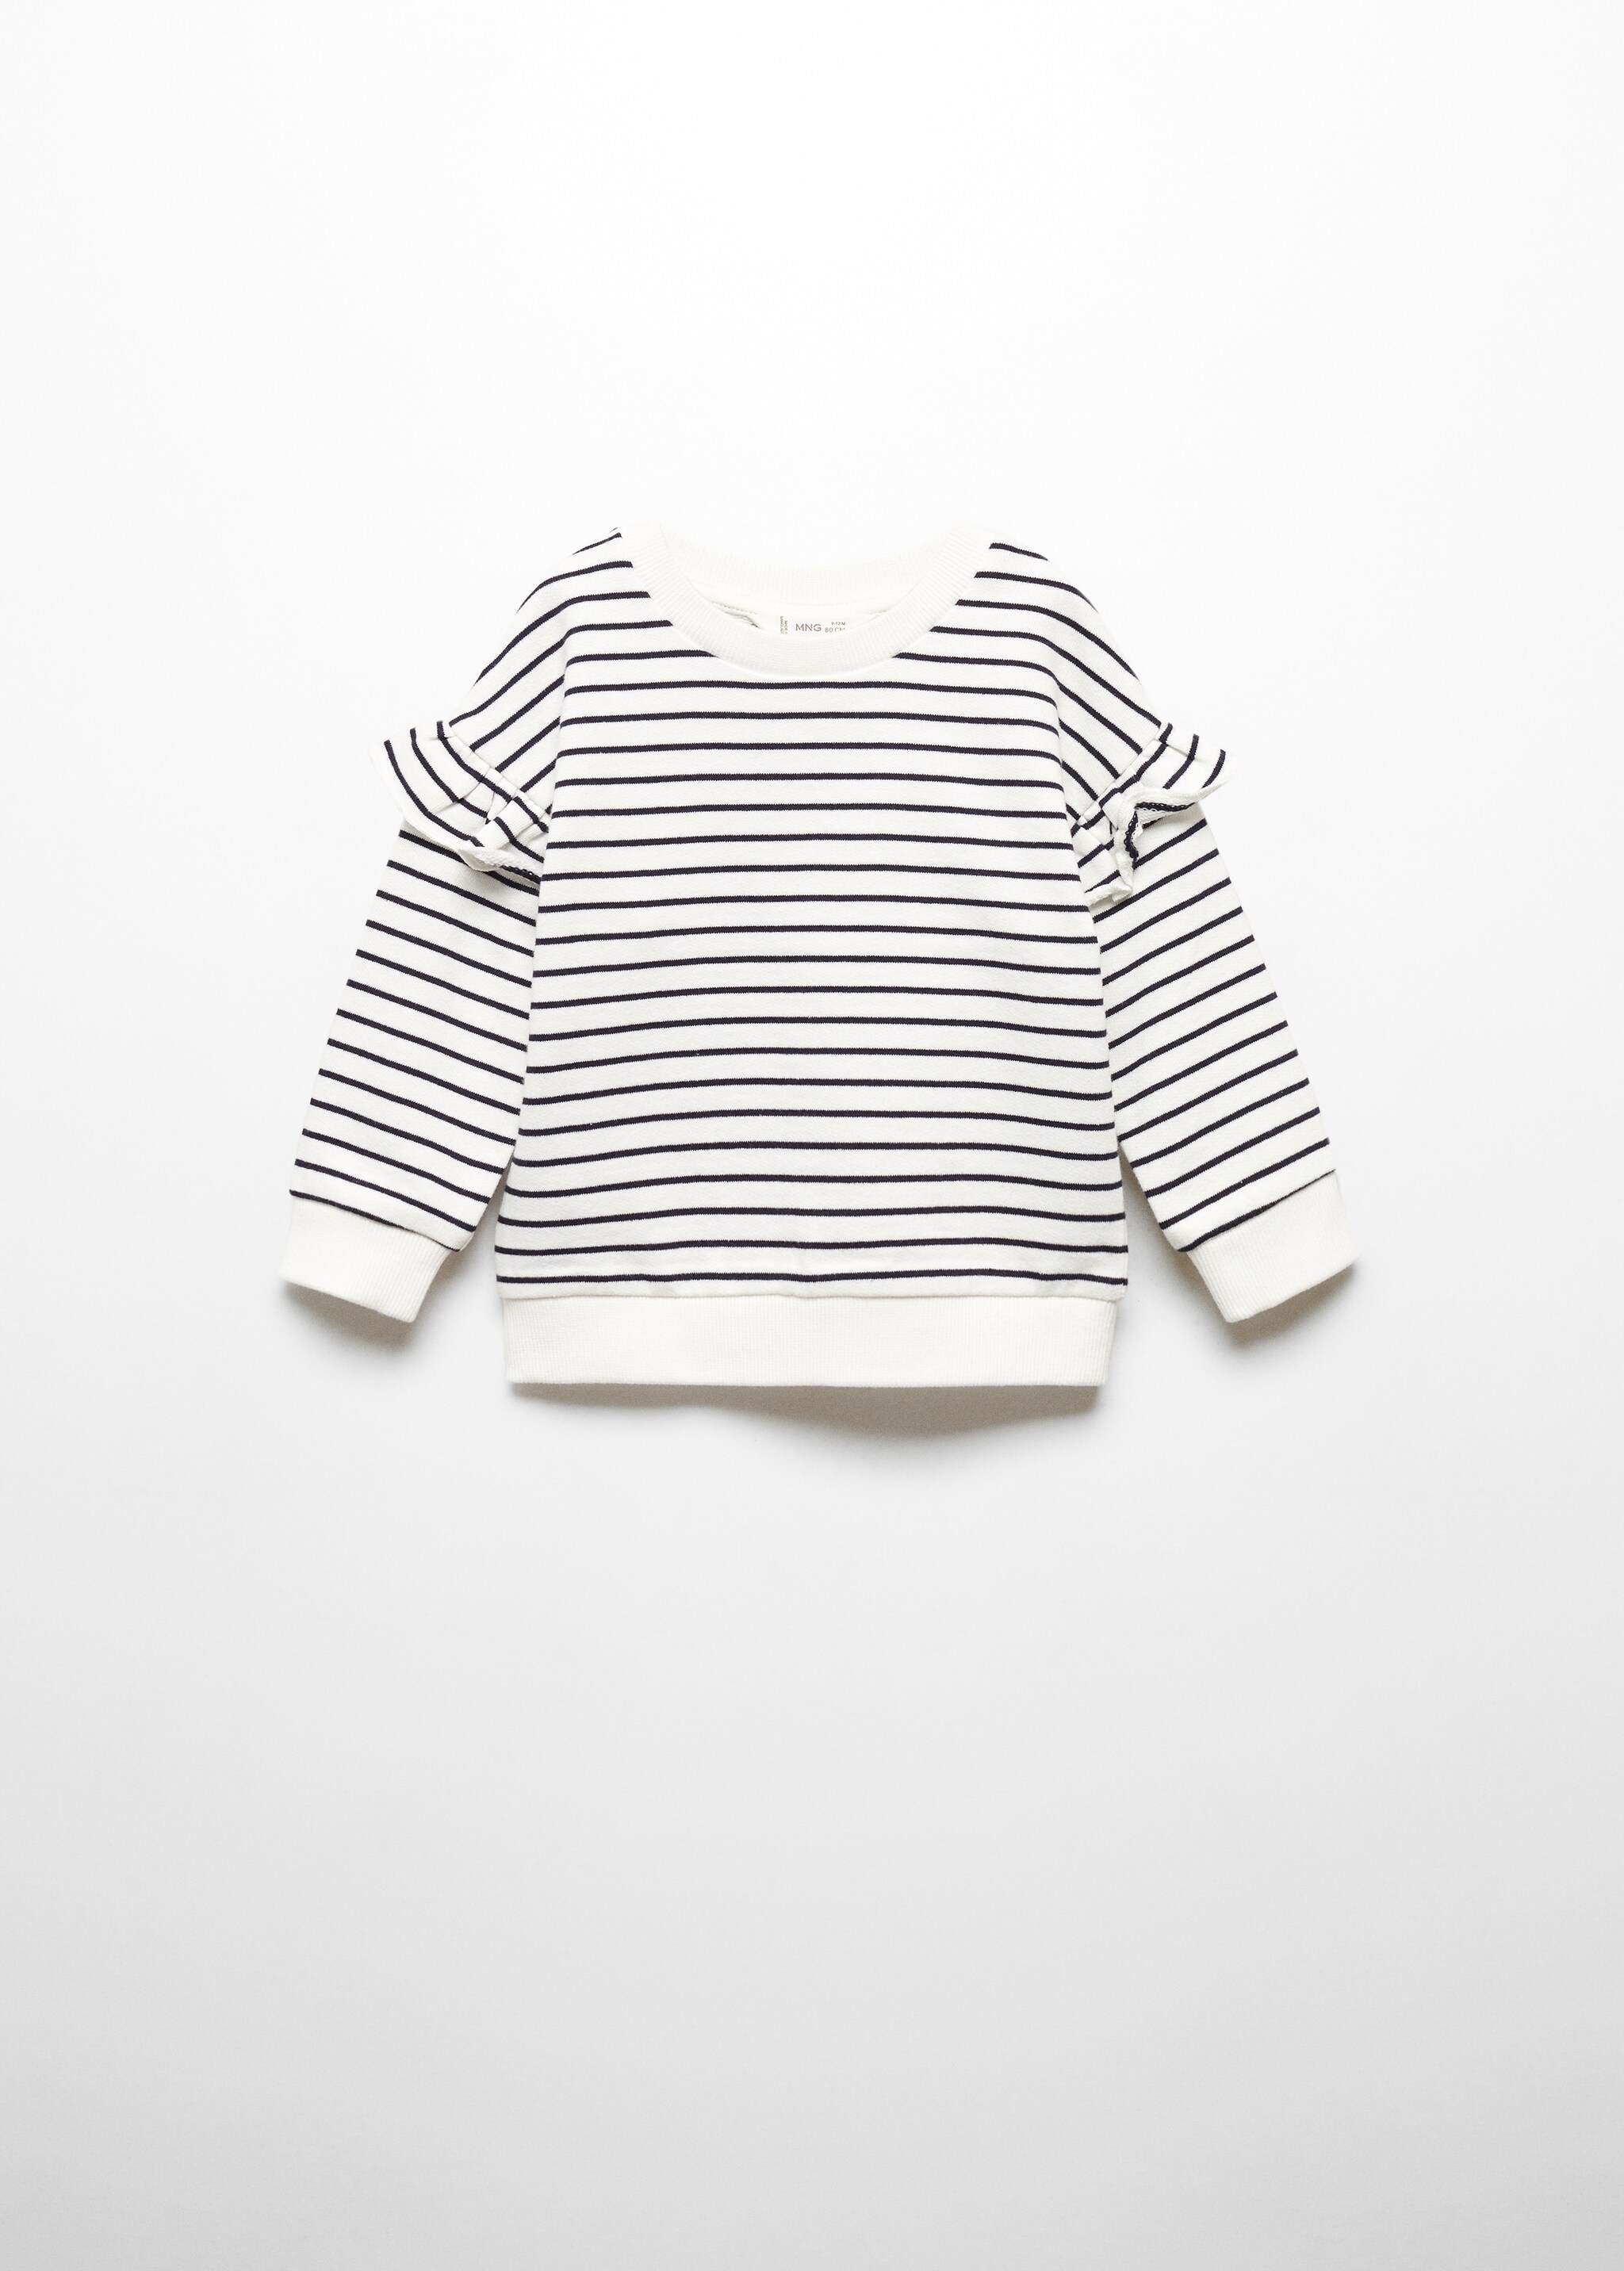 Ruffled striped sweatshirt - Article without model